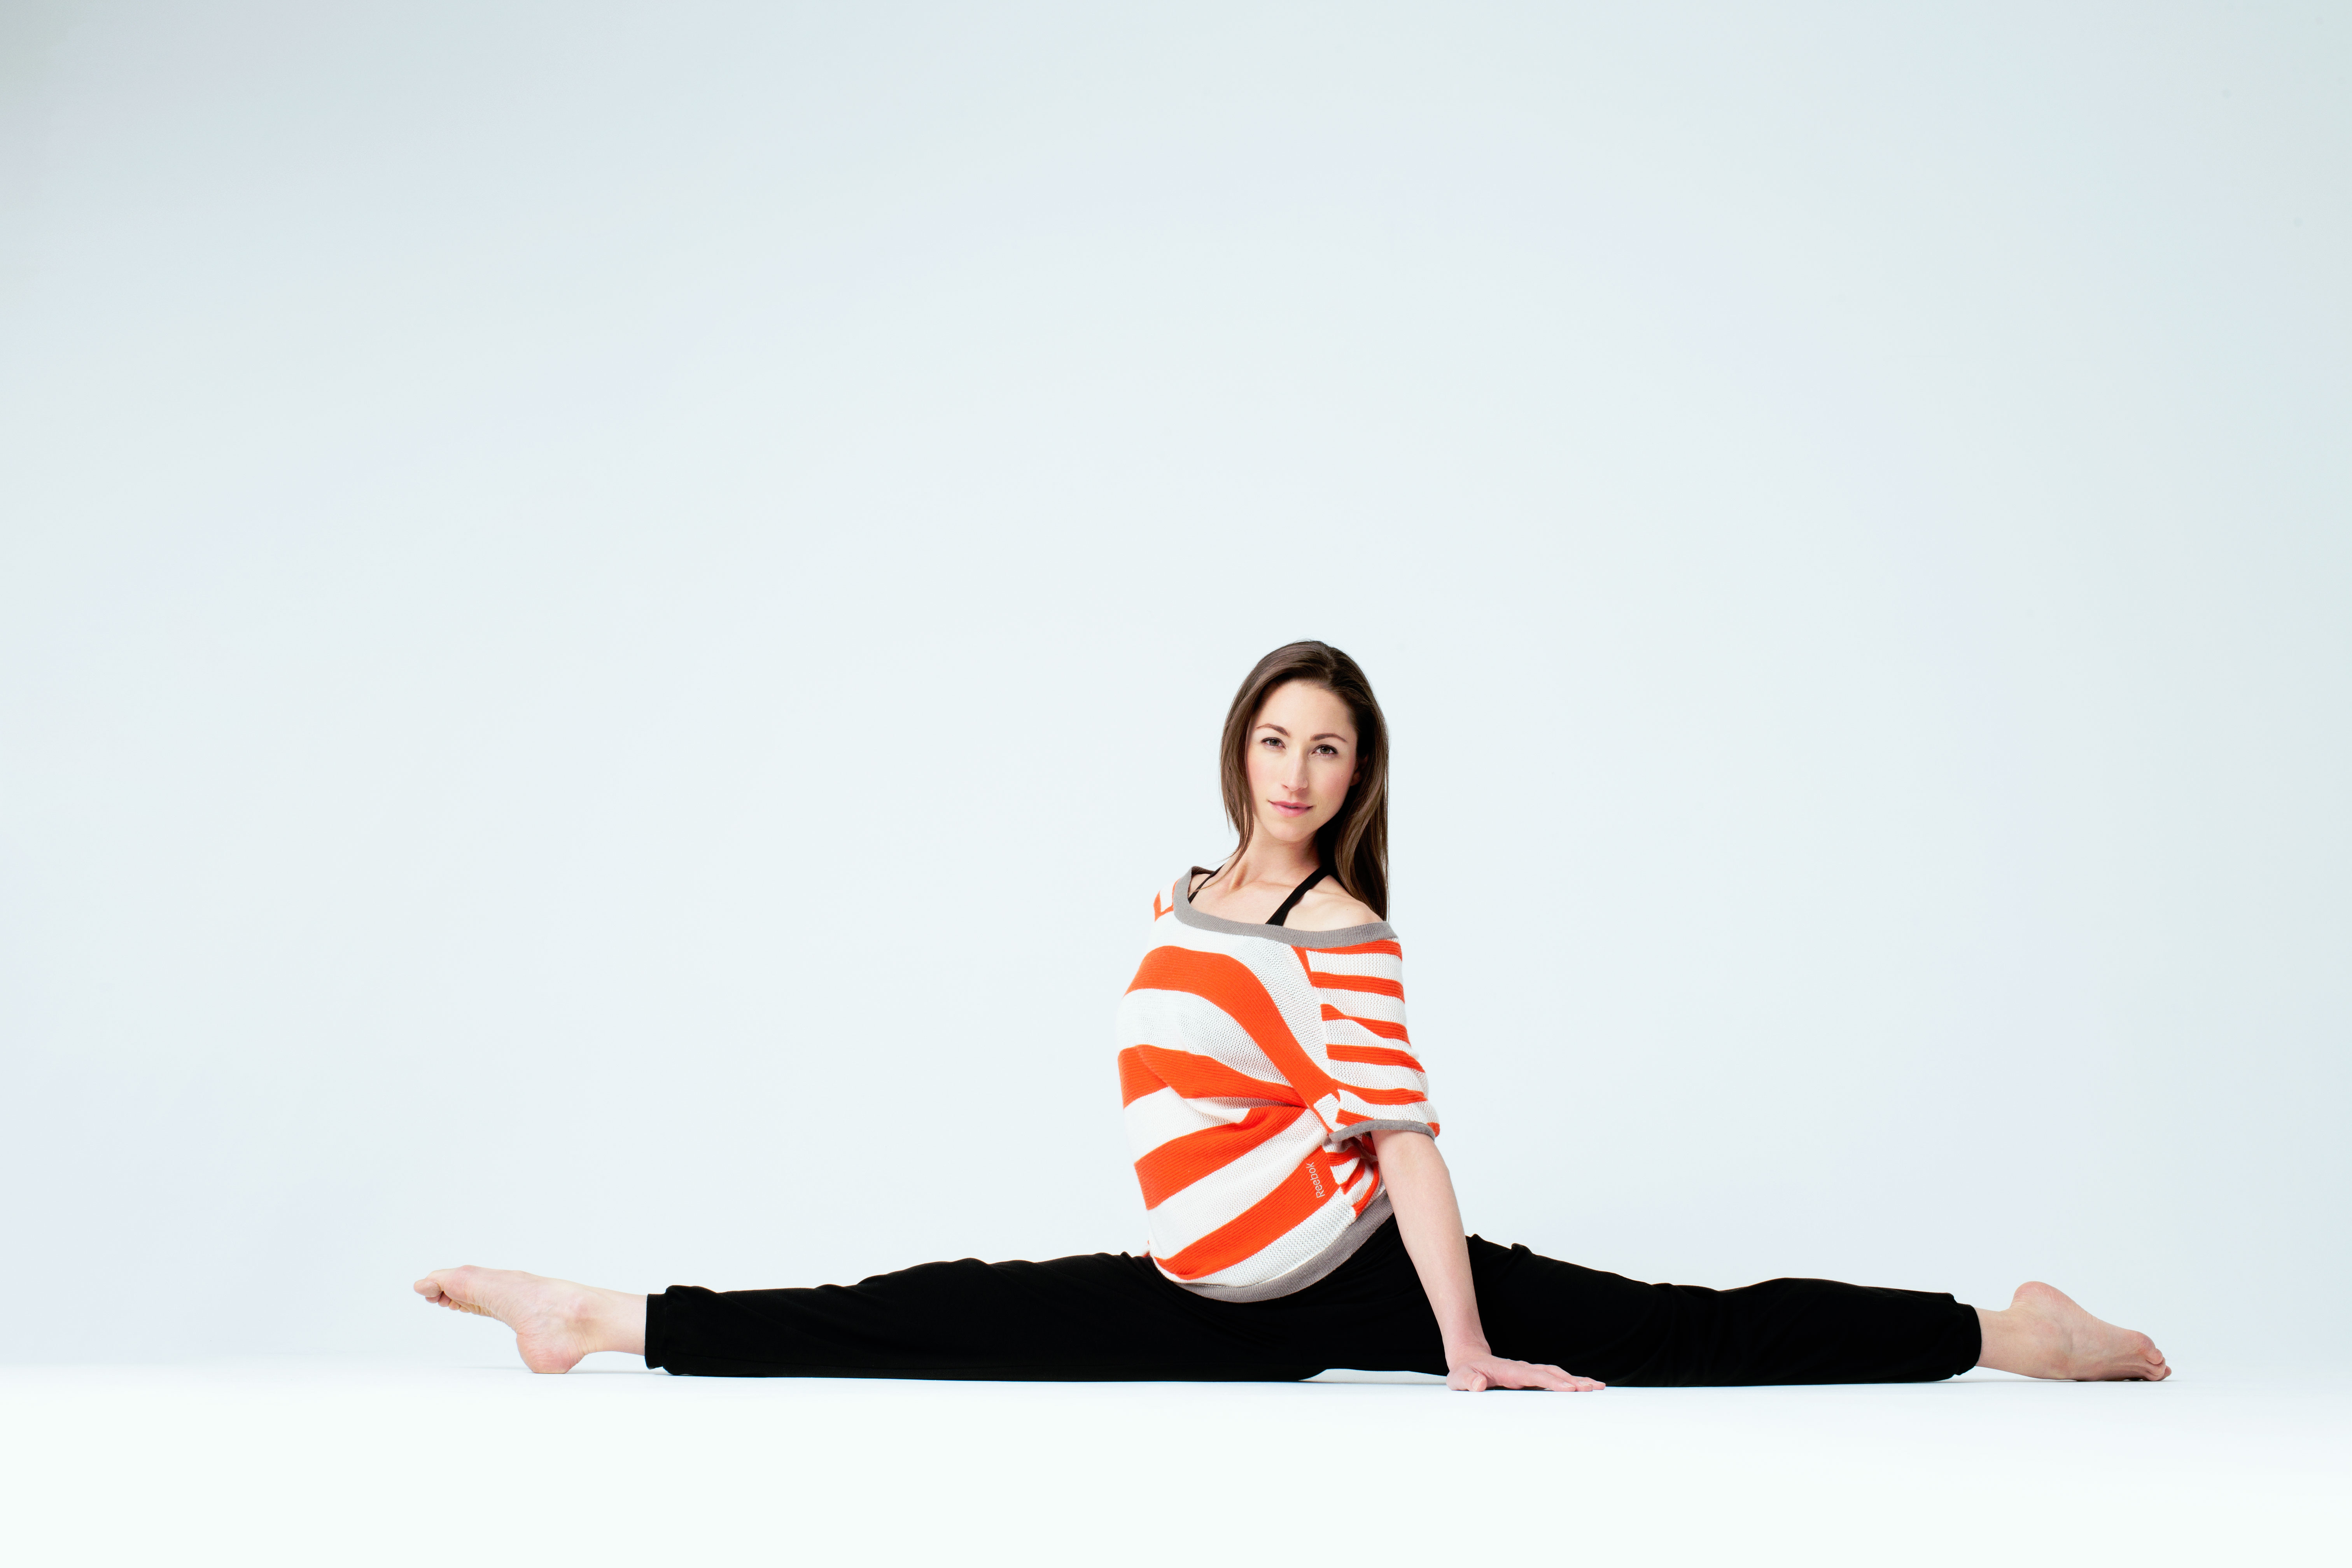 Reebok's Yoga collection with Tara Stiles